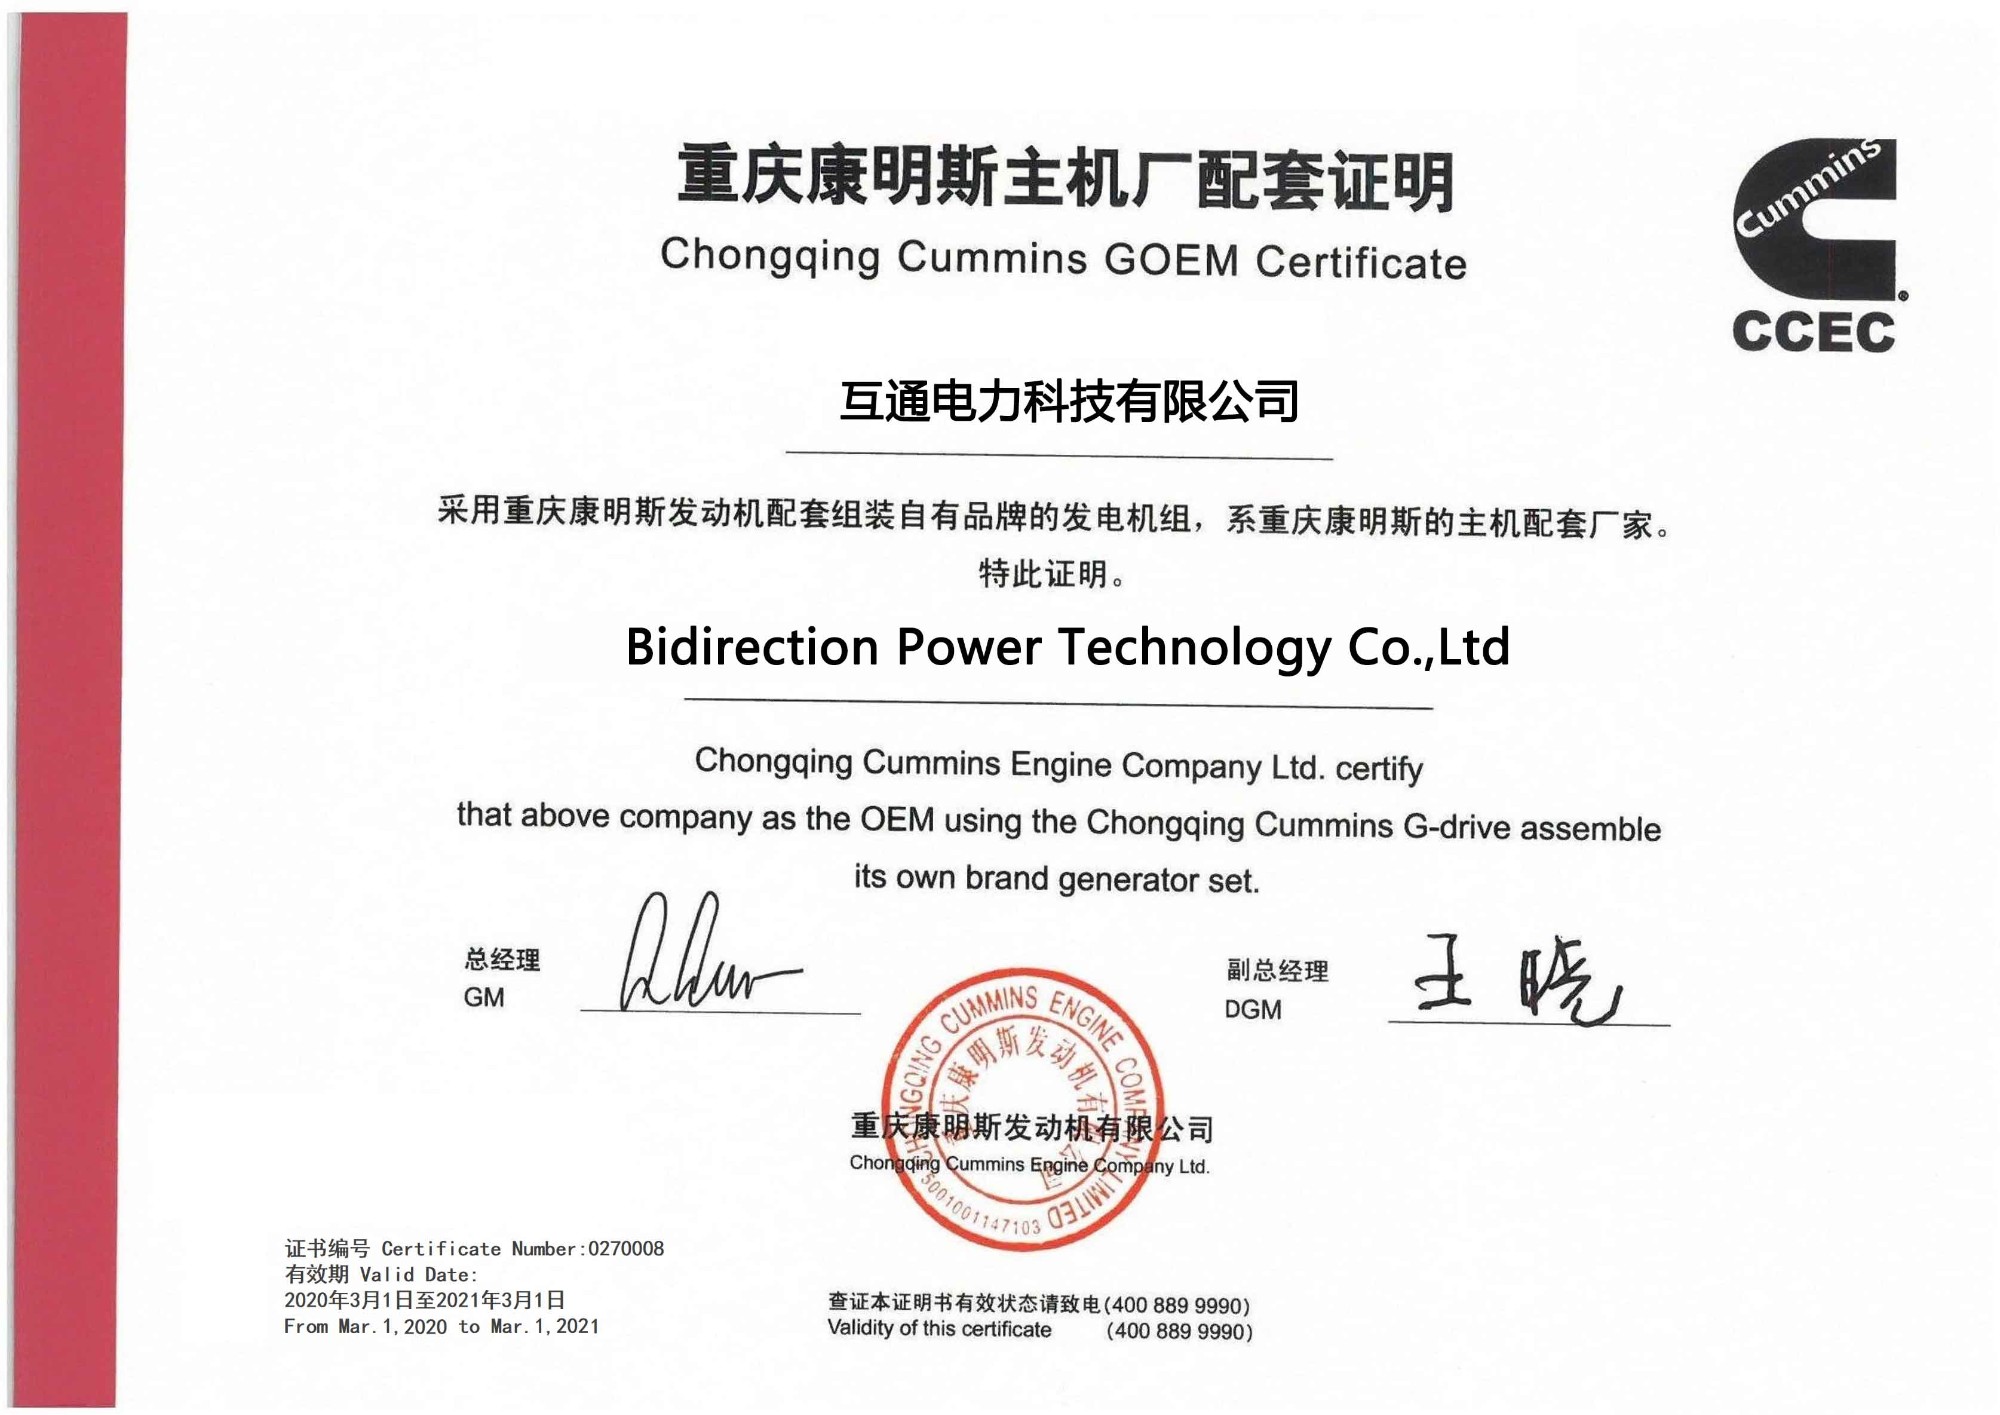 Bidirection Power Technology Co, Ltd Ovlašteno od Chongqing Cummins GOEM certifikata